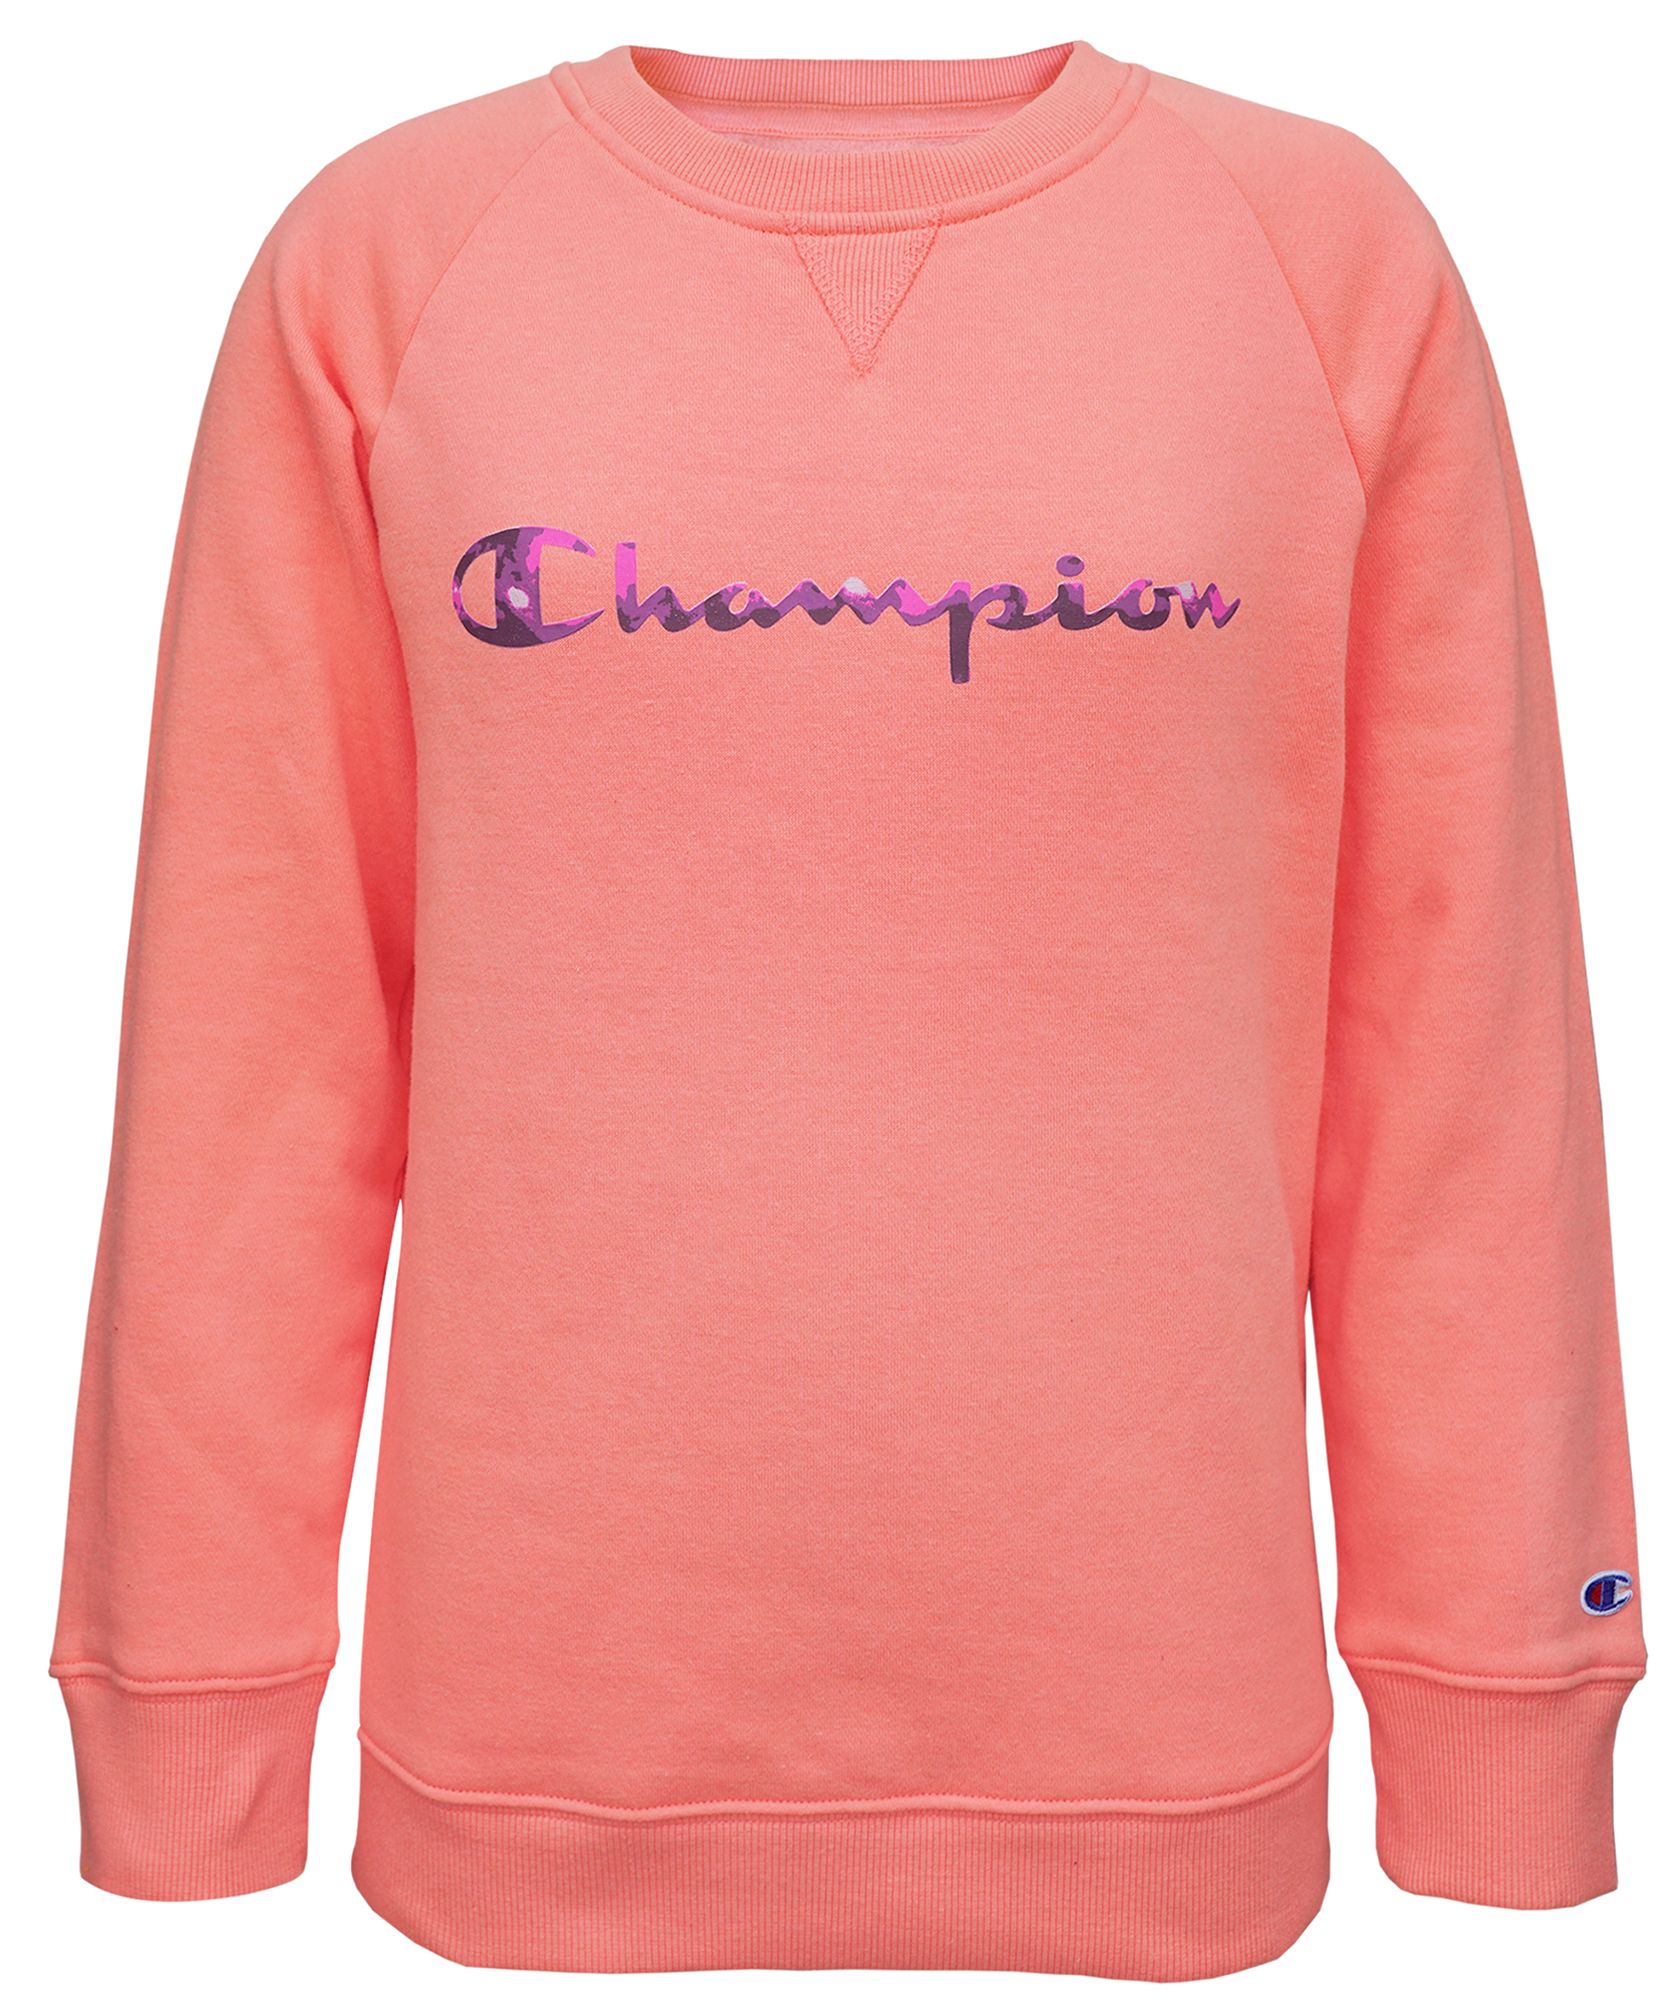 girls pink champion hoodie